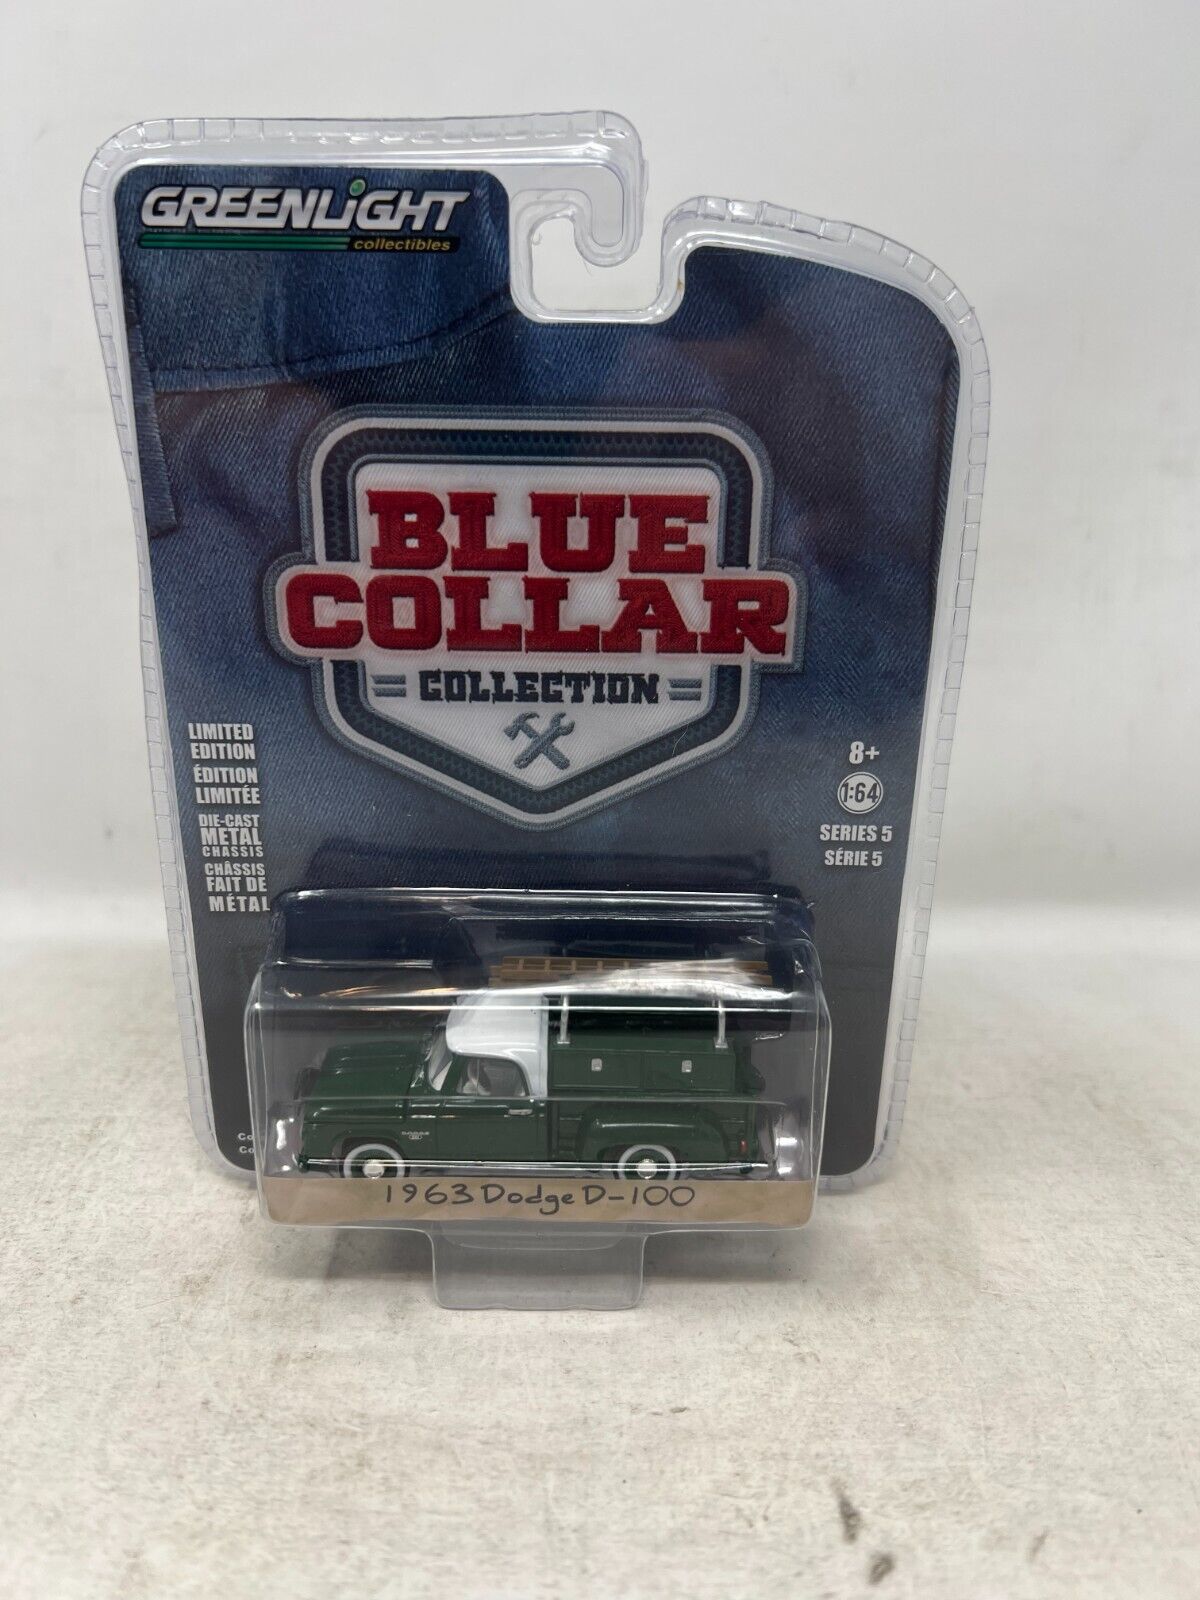 Greenlight Blue Collar Series 5 1963 Dodge D-100 1:64 Diecast